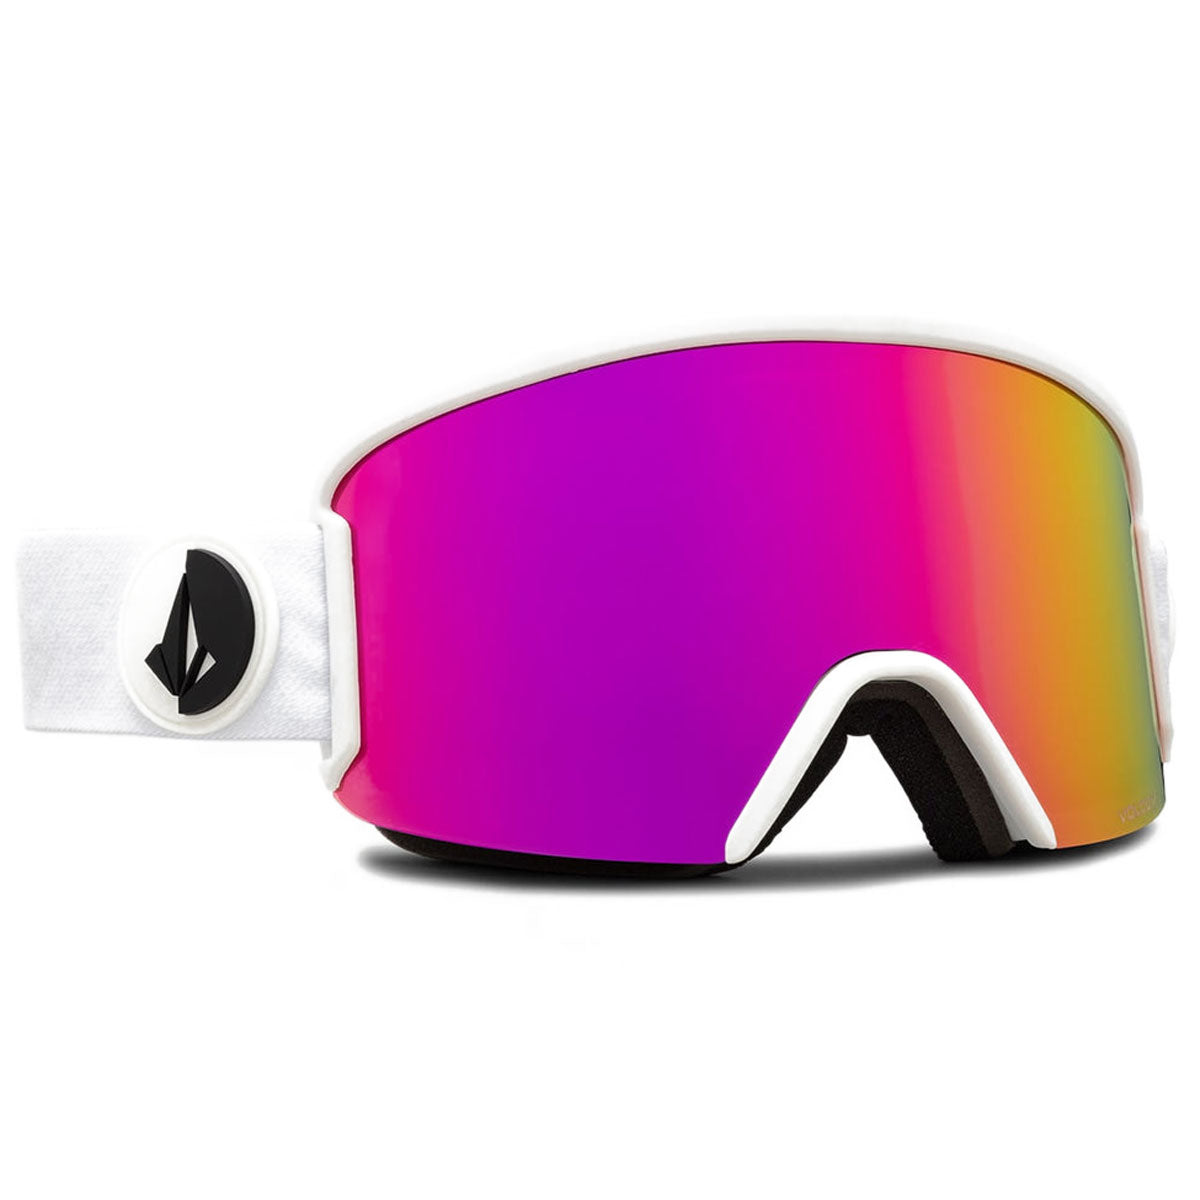 Volcom Garden Snowboard Goggles - Matte White/Pink Chrome image 3